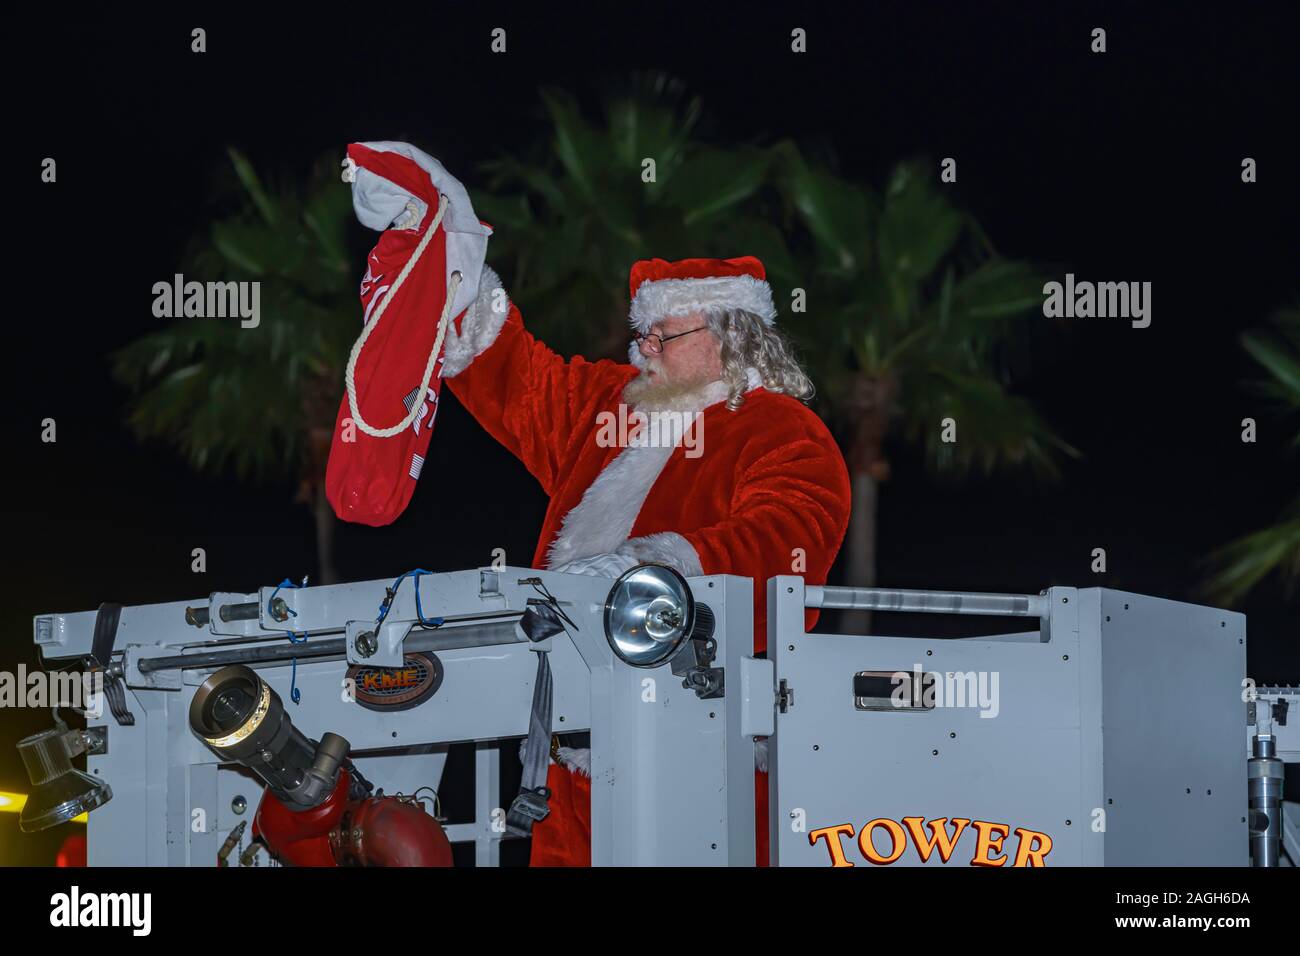 Panama City, Florida, USA. 12/14/2019. Während das Panama City Christmas Parade Santa realisiert seine Tasche von Spielzeug in fast leer. Stockfoto